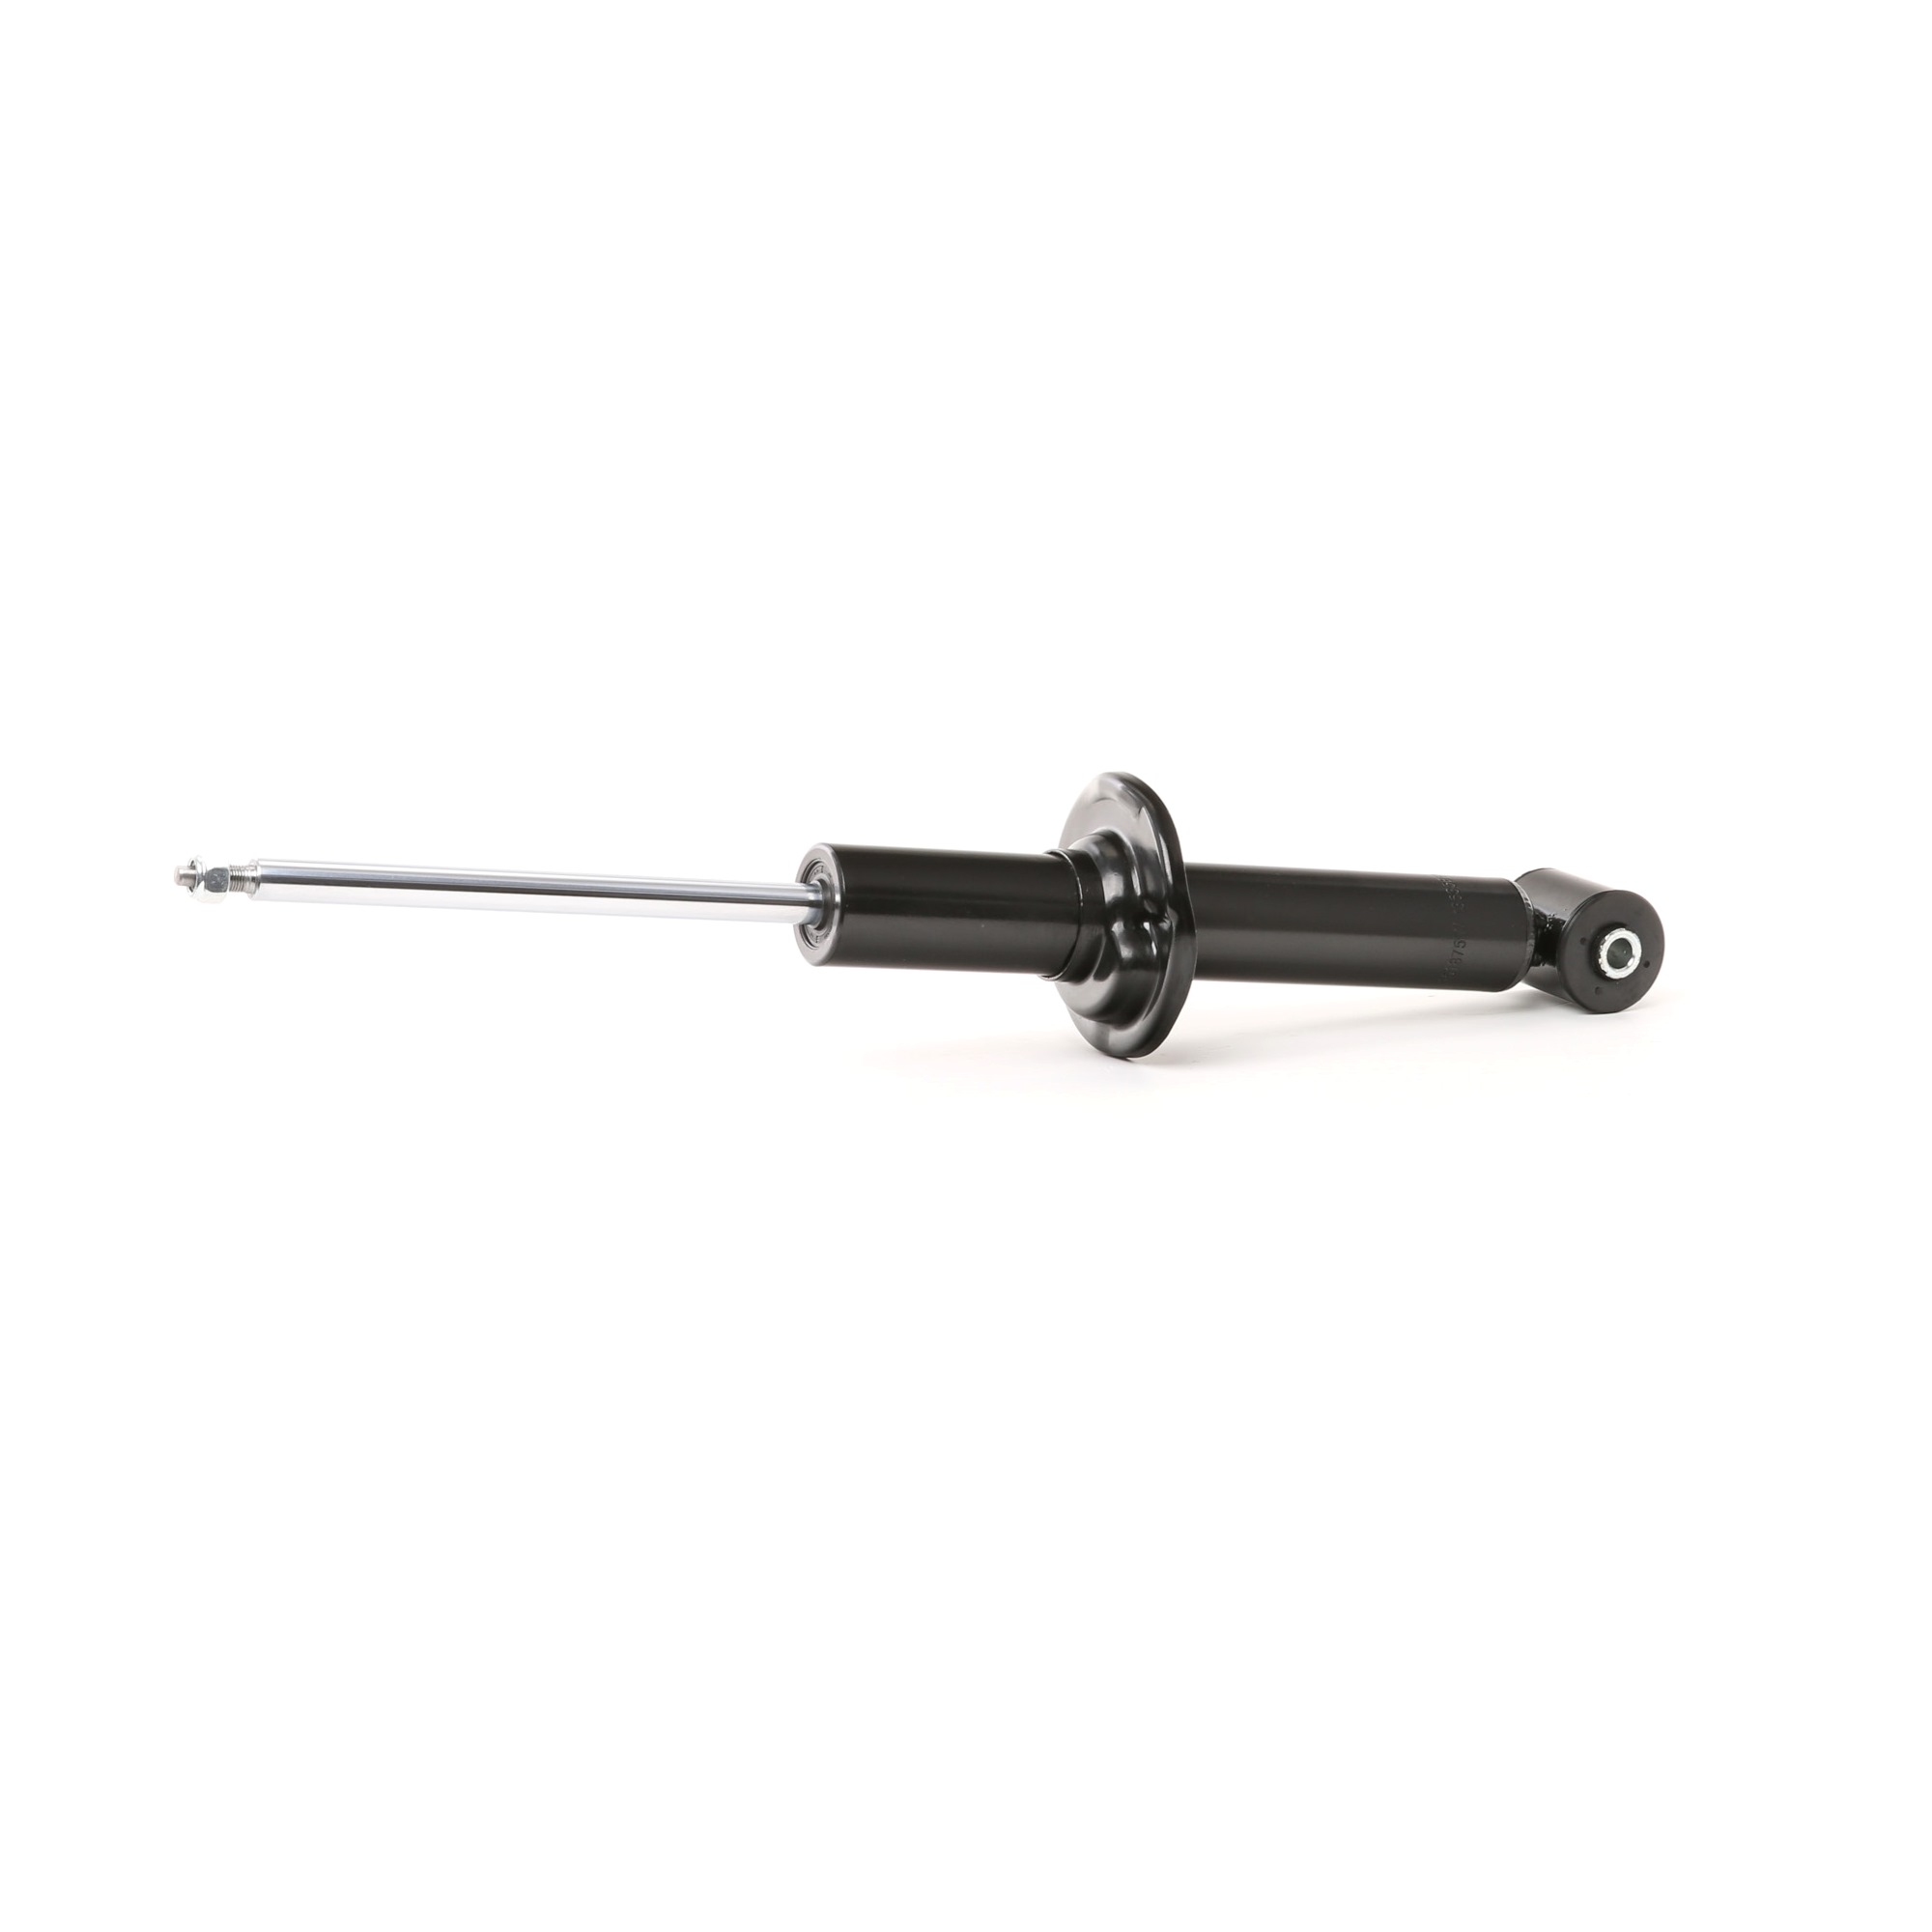 RIDEX 854S1896 Shock absorber Rear Axle, Gas Pressure, Spring-bearing Damper, Top pin, Bottom eye